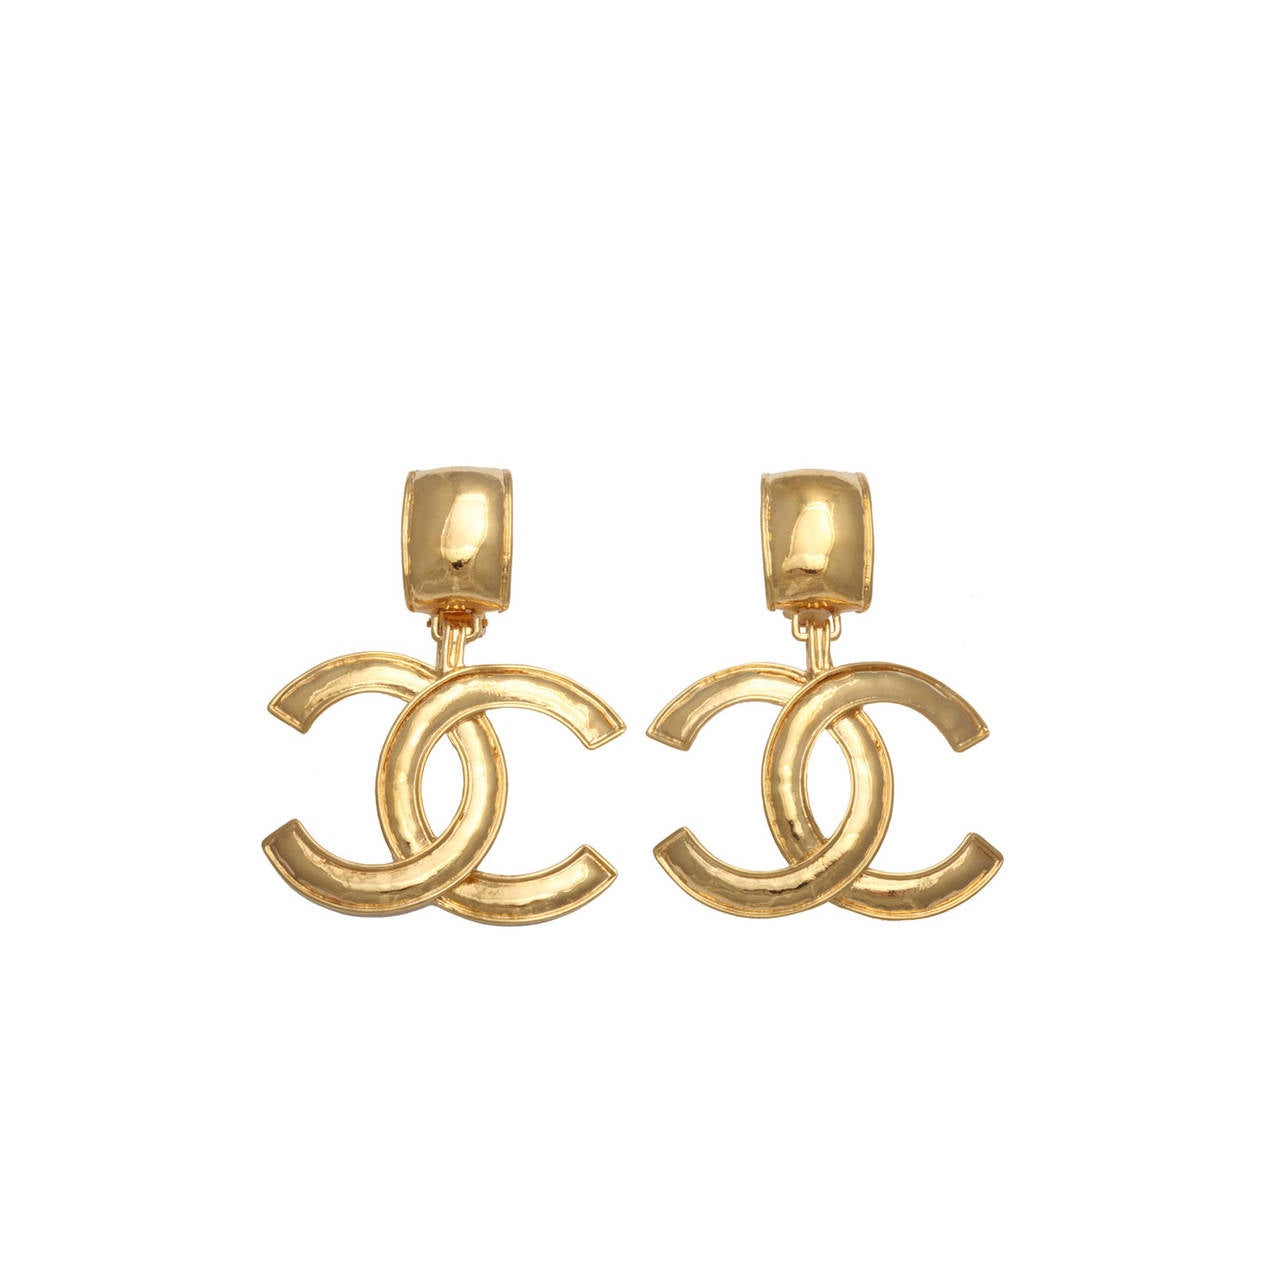 Authentic Vintage Chanel earrings CC logo hoop dangle large